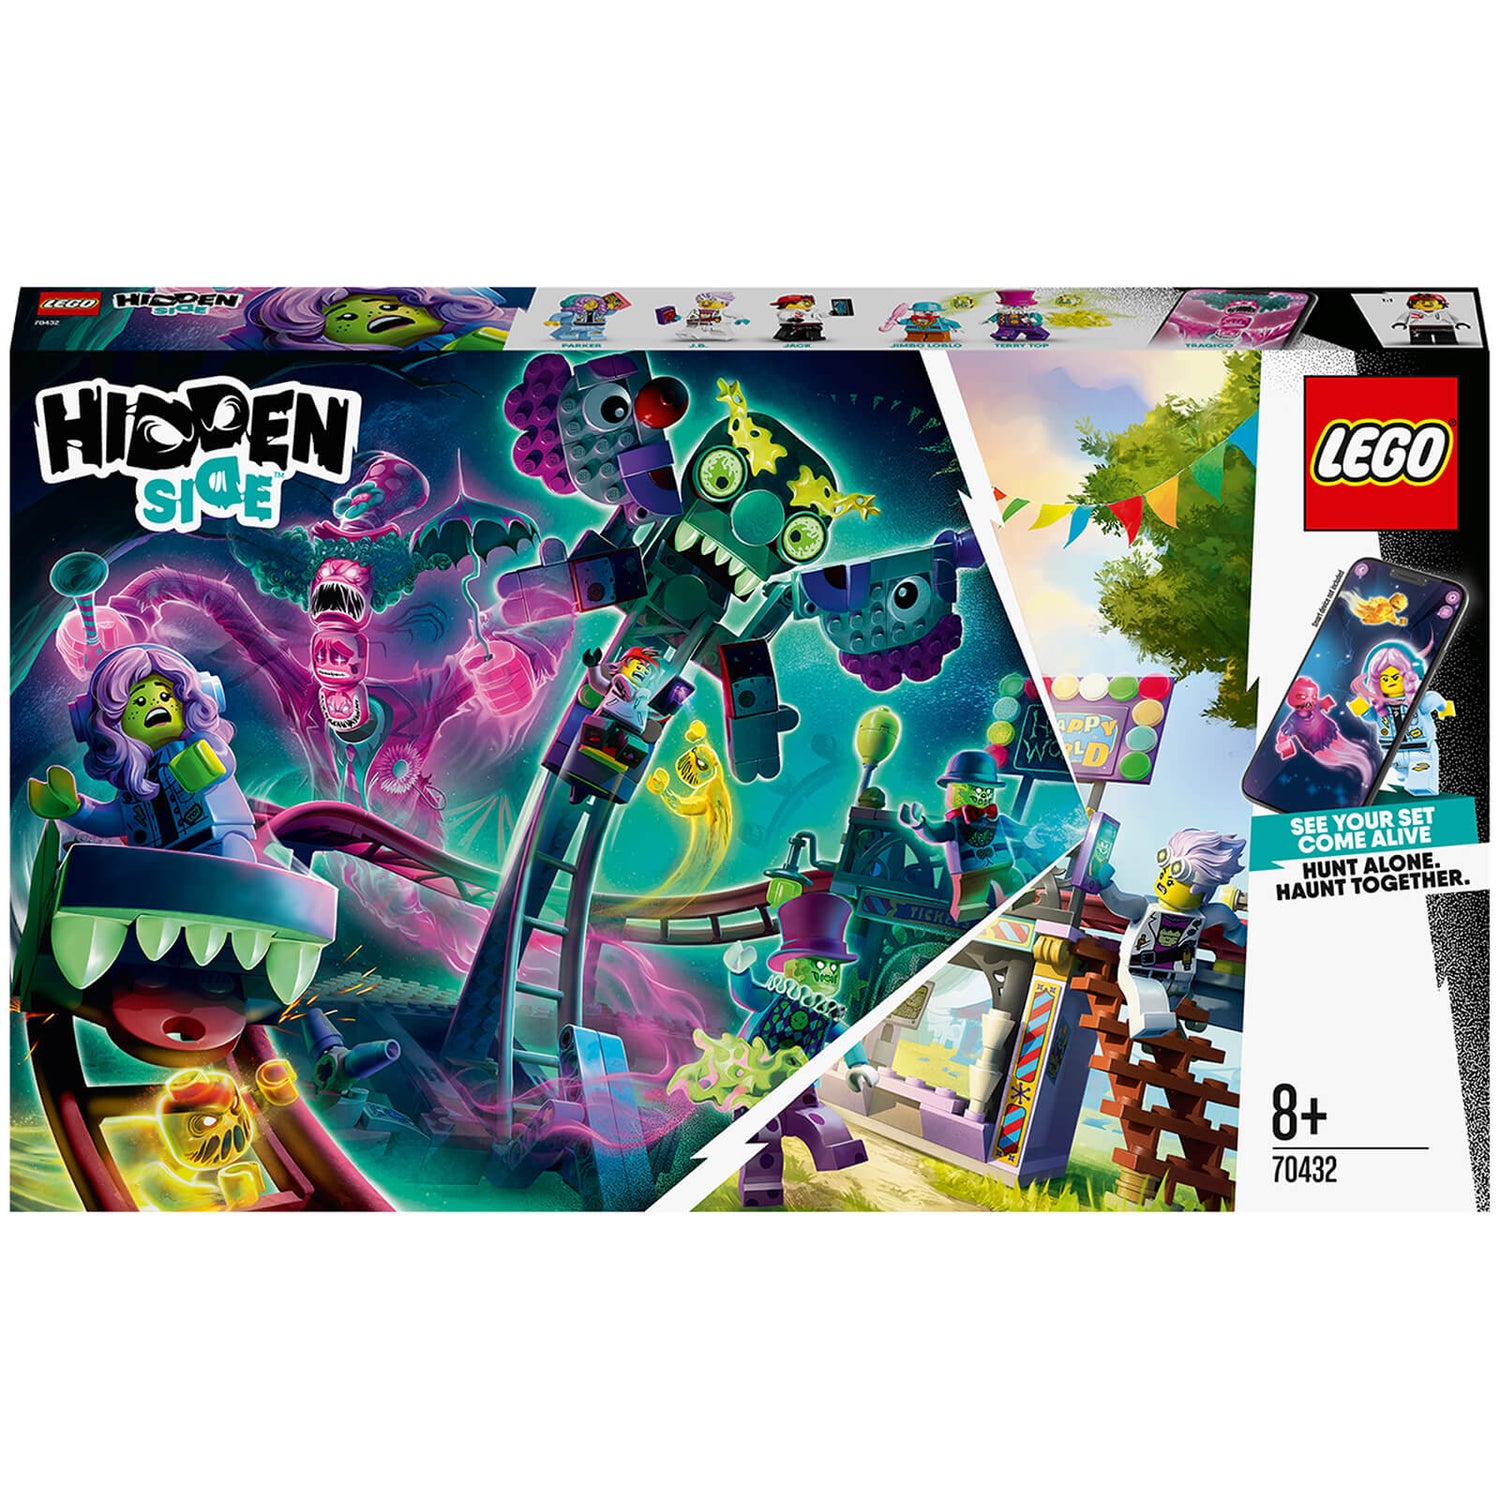 LEGO Hidden Side Haunted Fairground AR Games App Set (70432) Toys